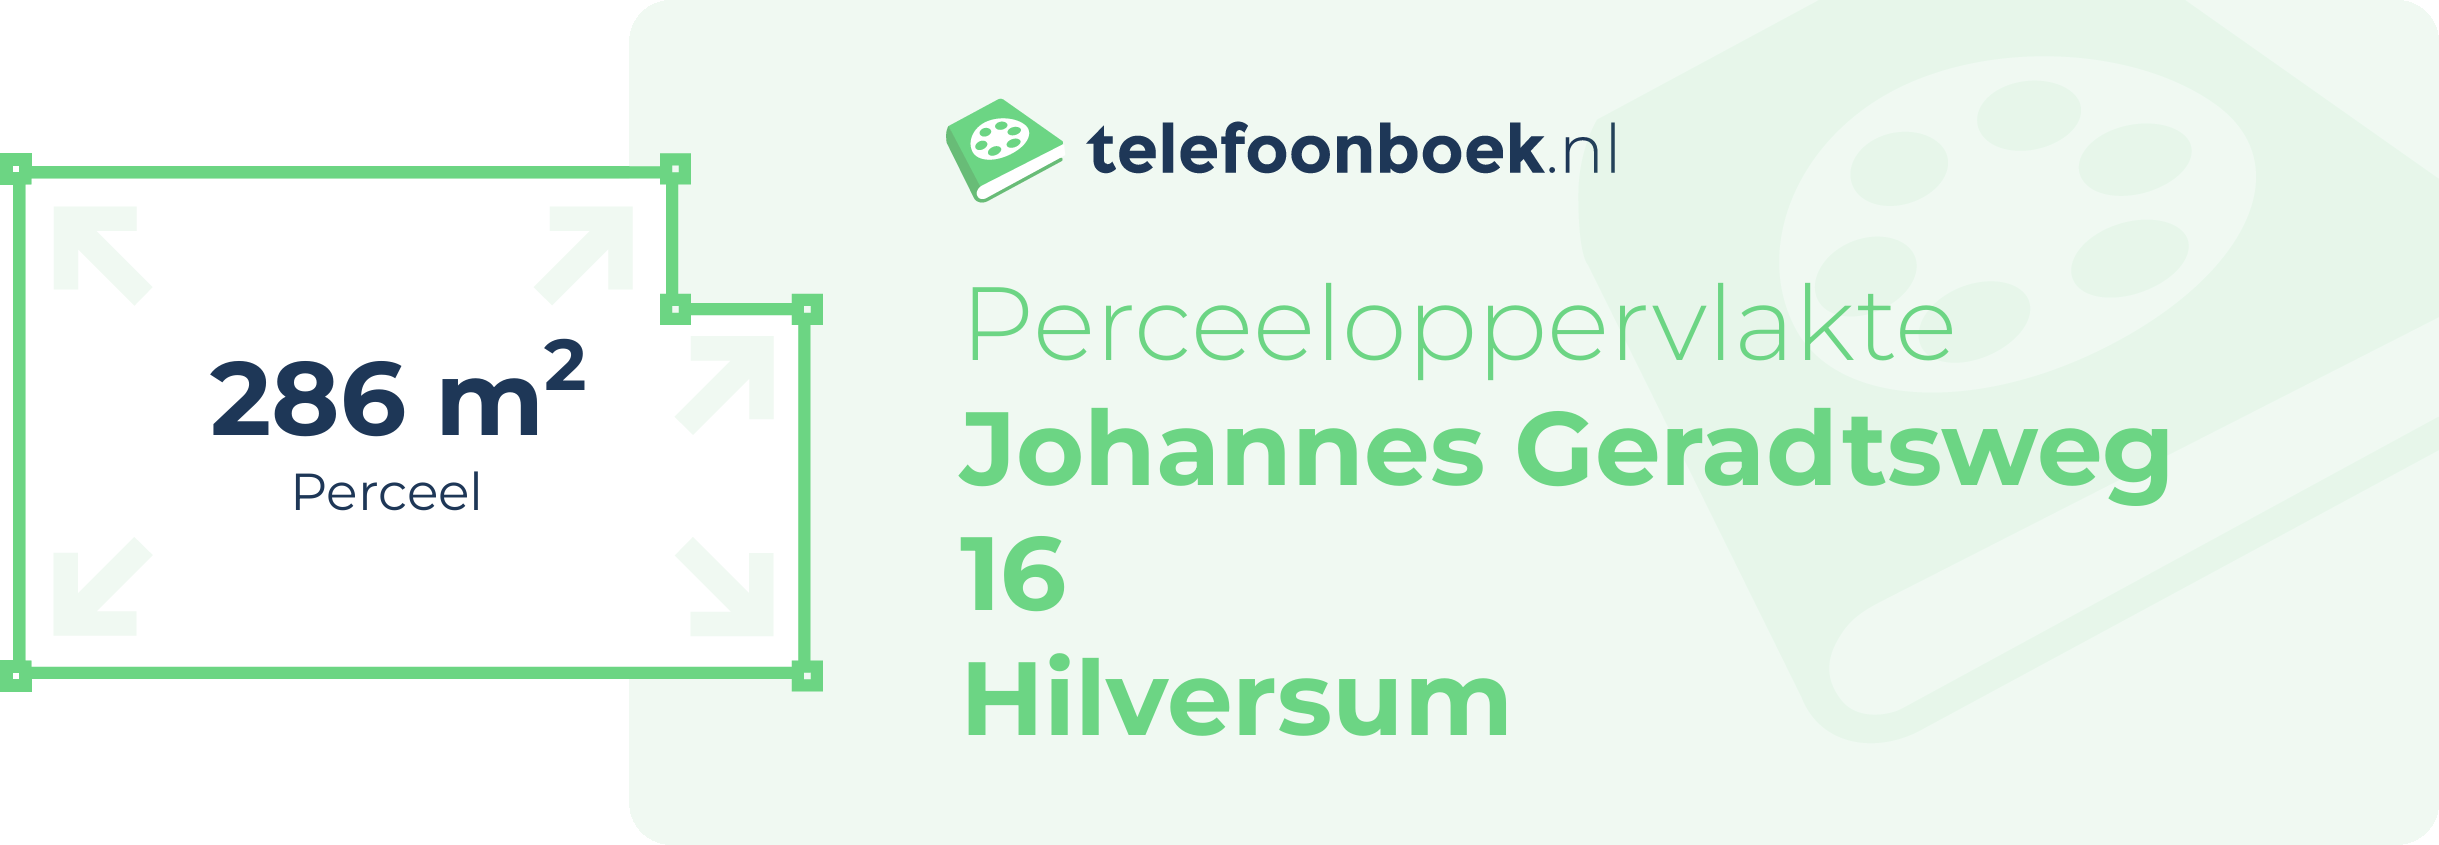 Perceeloppervlakte Johannes Geradtsweg 16 Hilversum